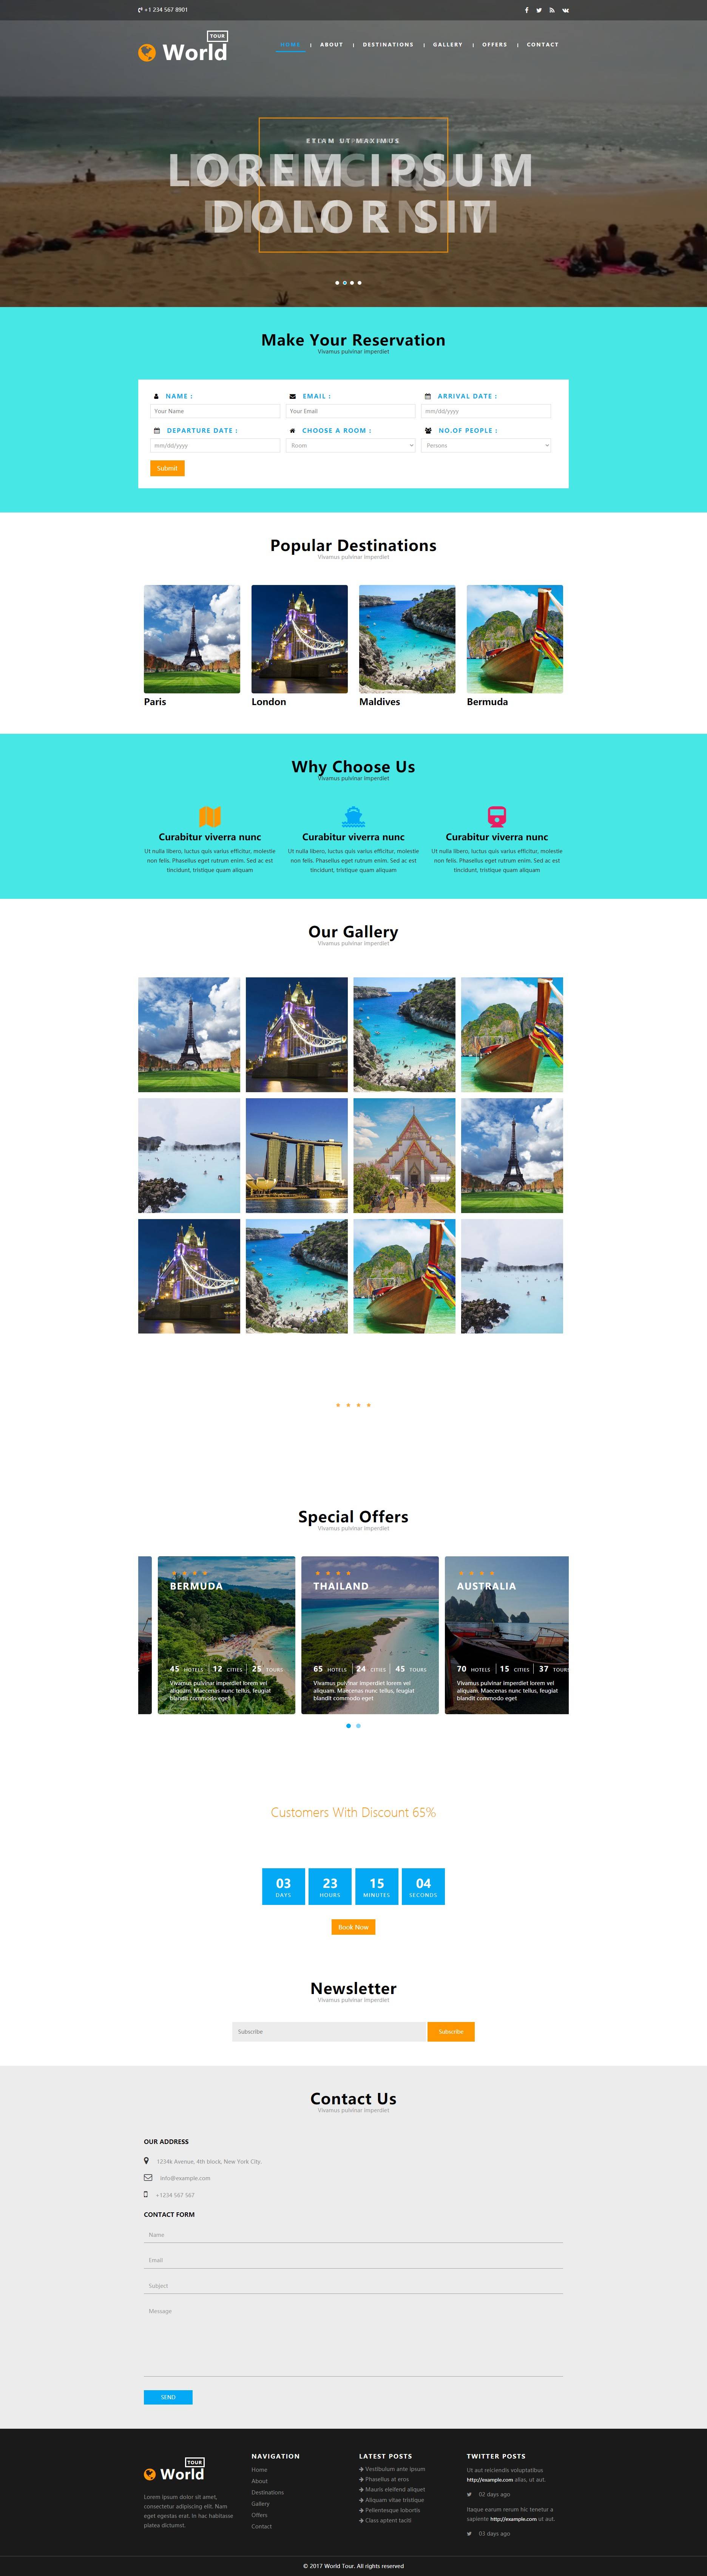 html首页动图轮播效果旅行网站模板